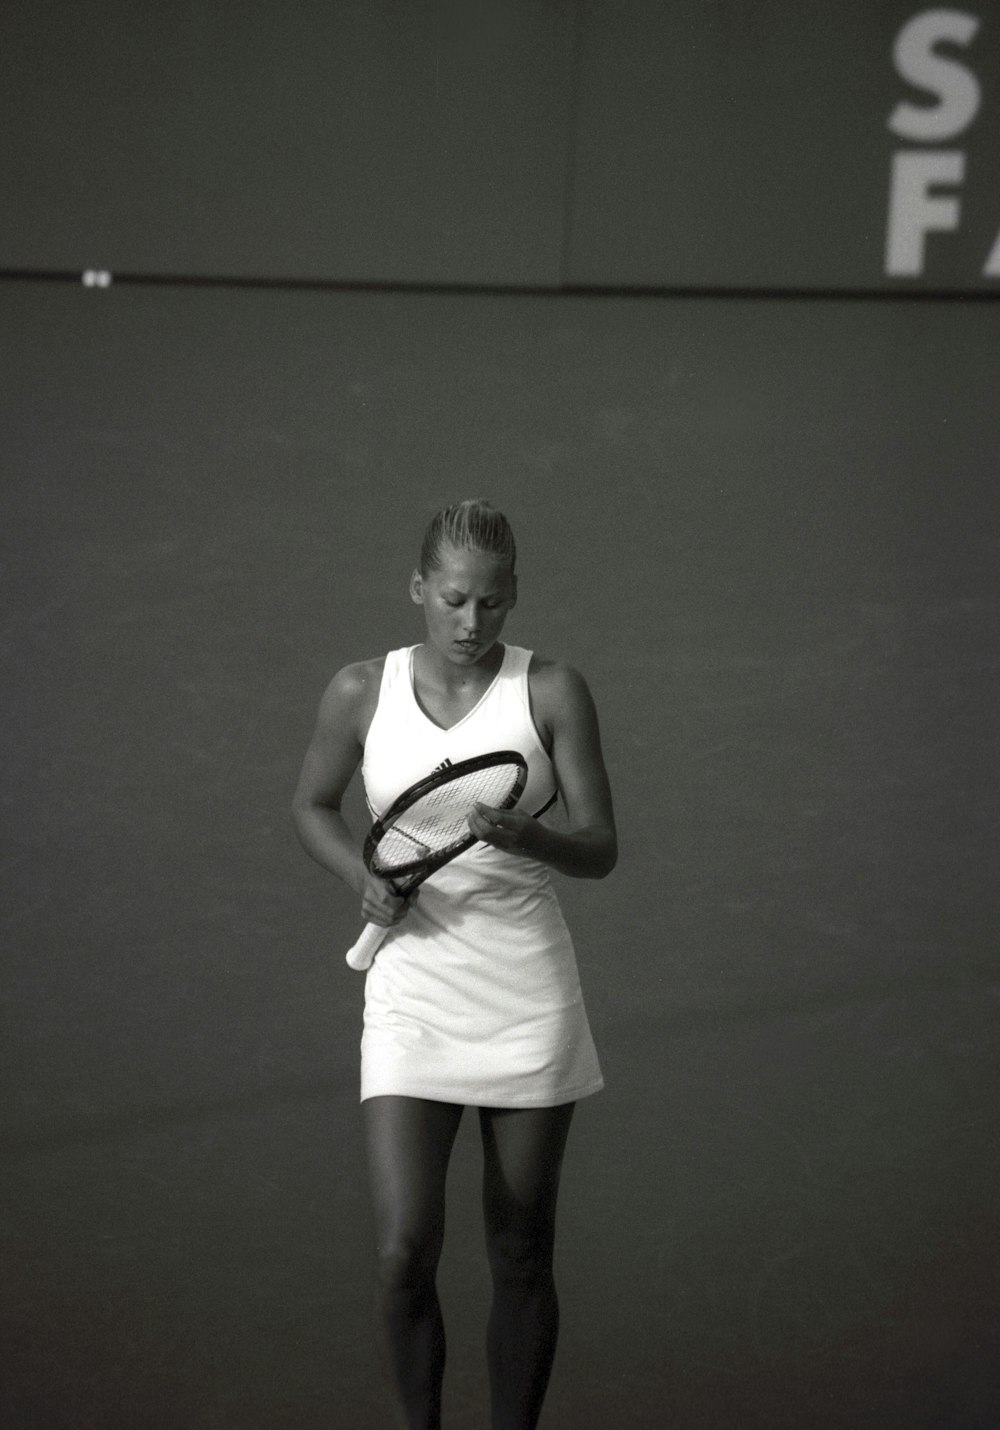 woman wearing dress holding tennis racket